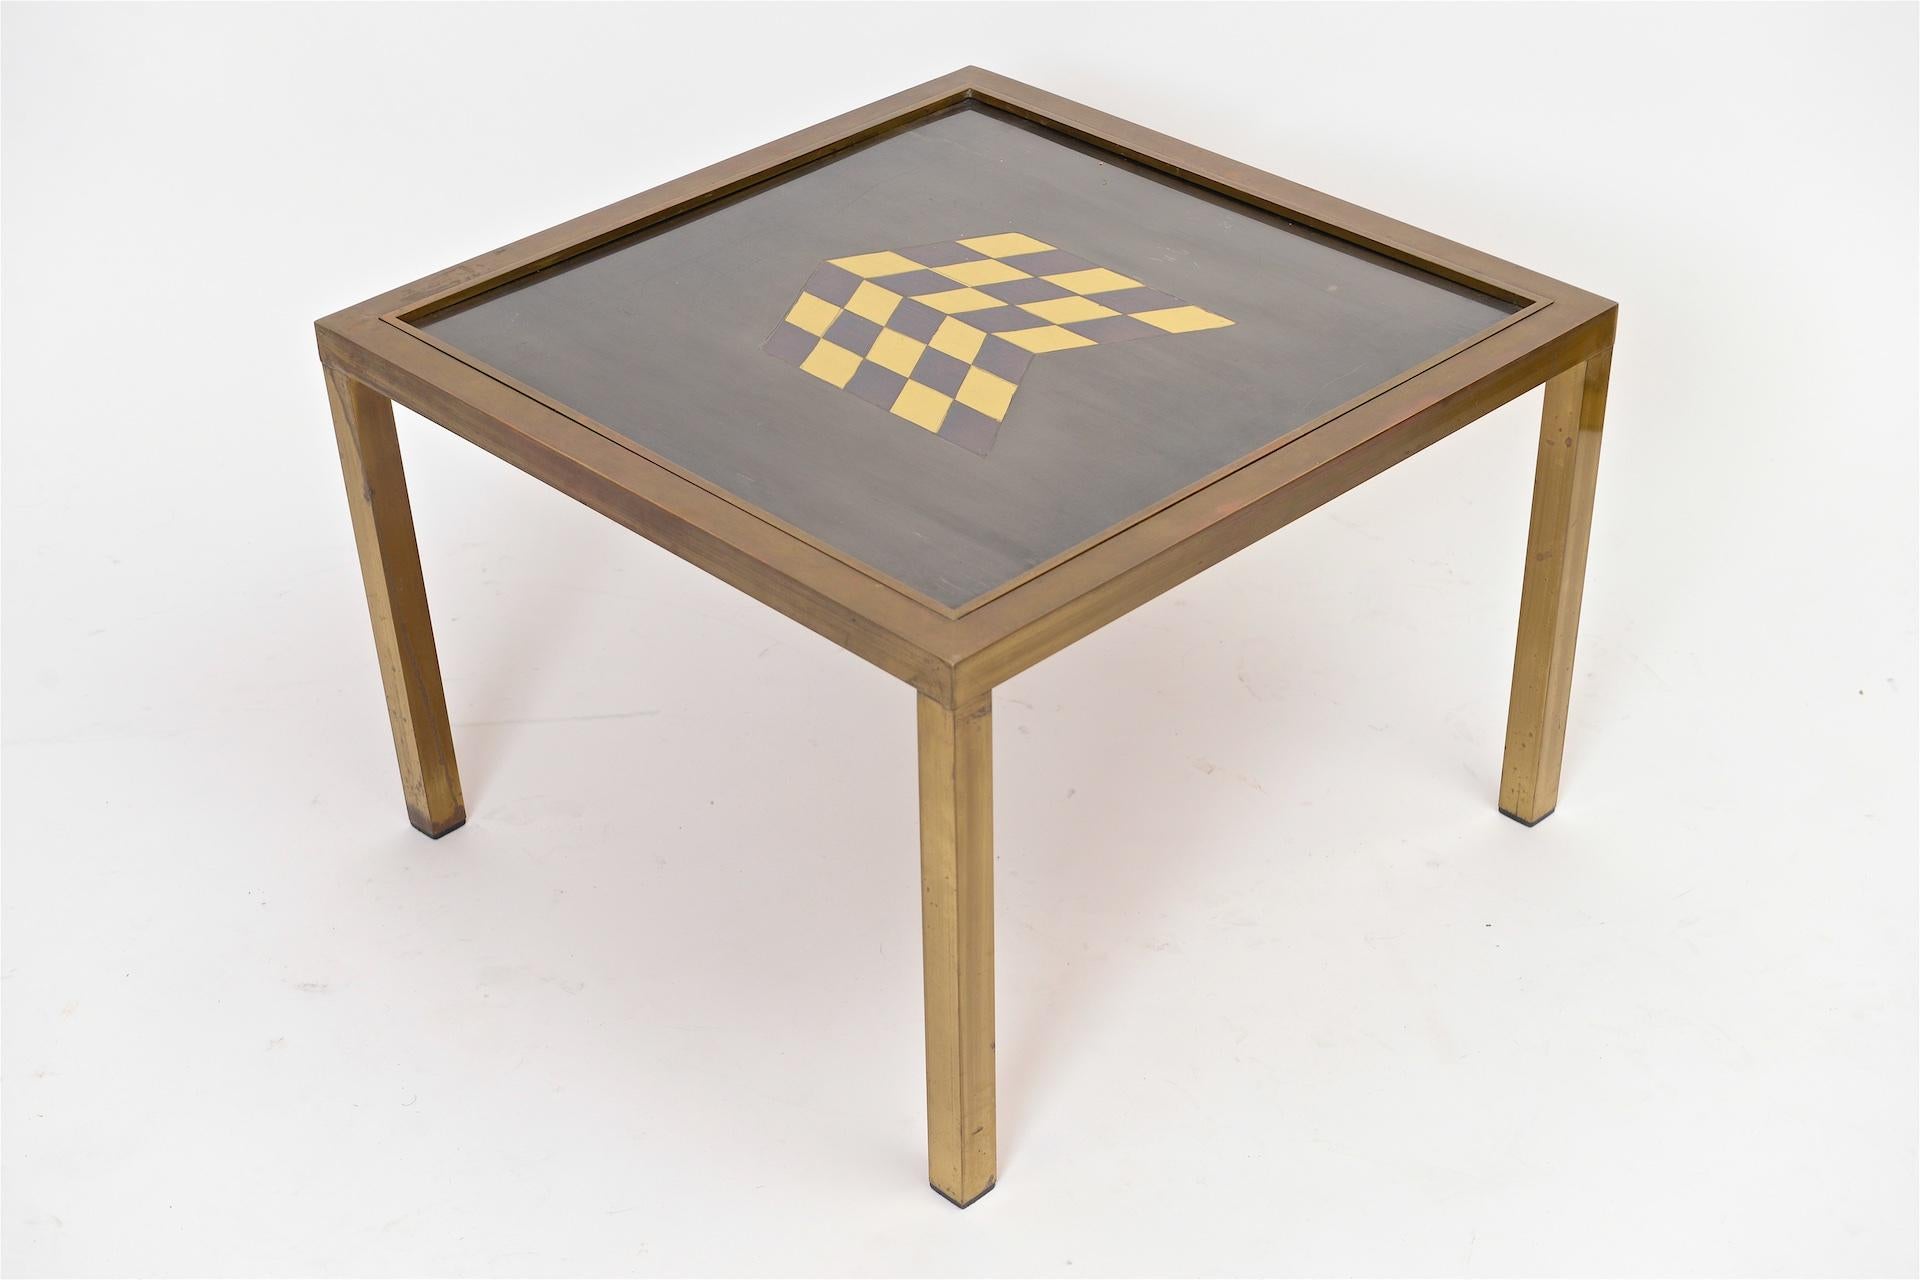 Good quality Italian side table with geometric motif.